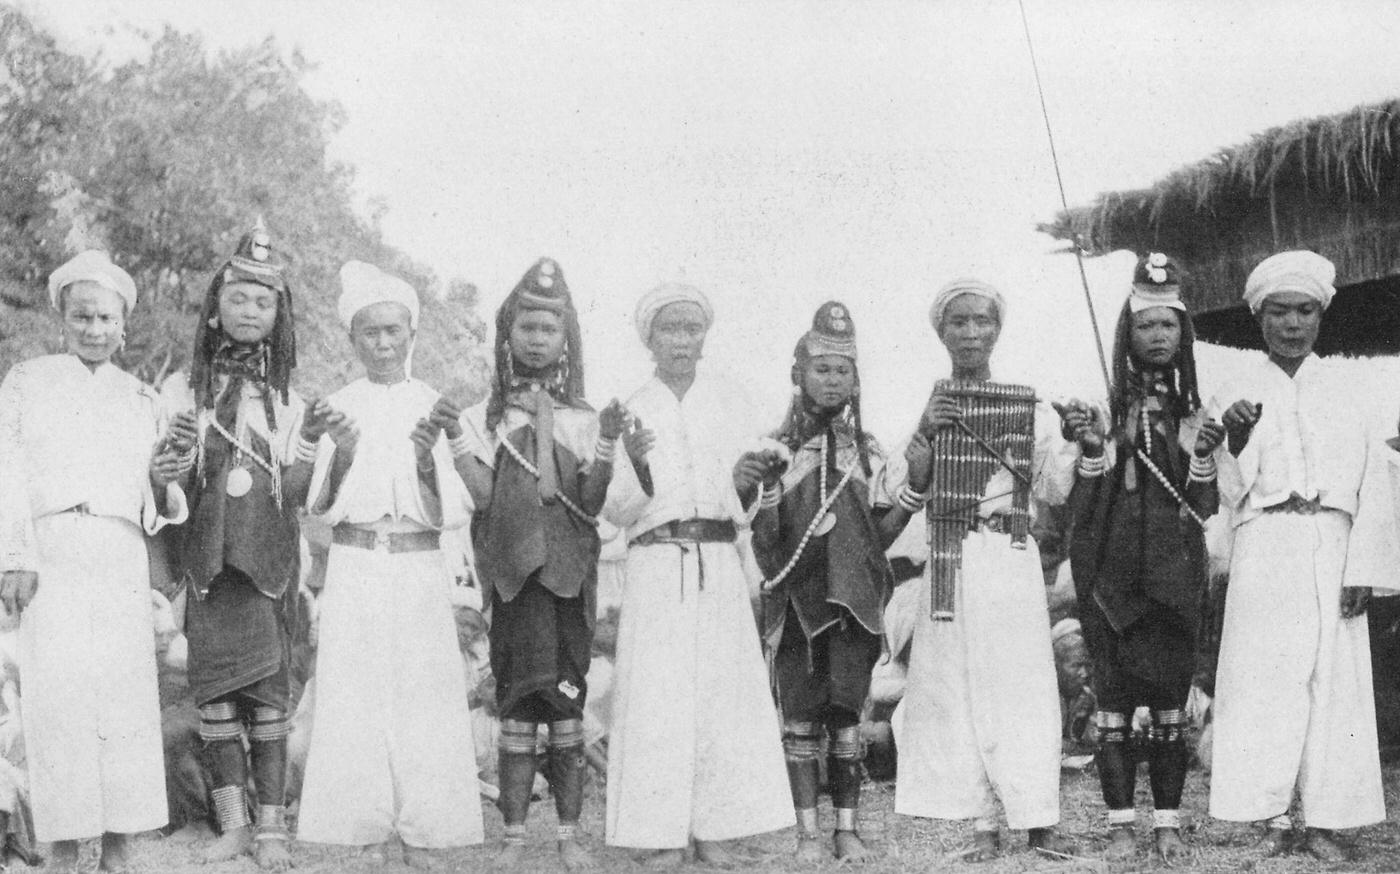 Tribe members performing a Padaung dance in traditional clothing, Myanmar, 1922.